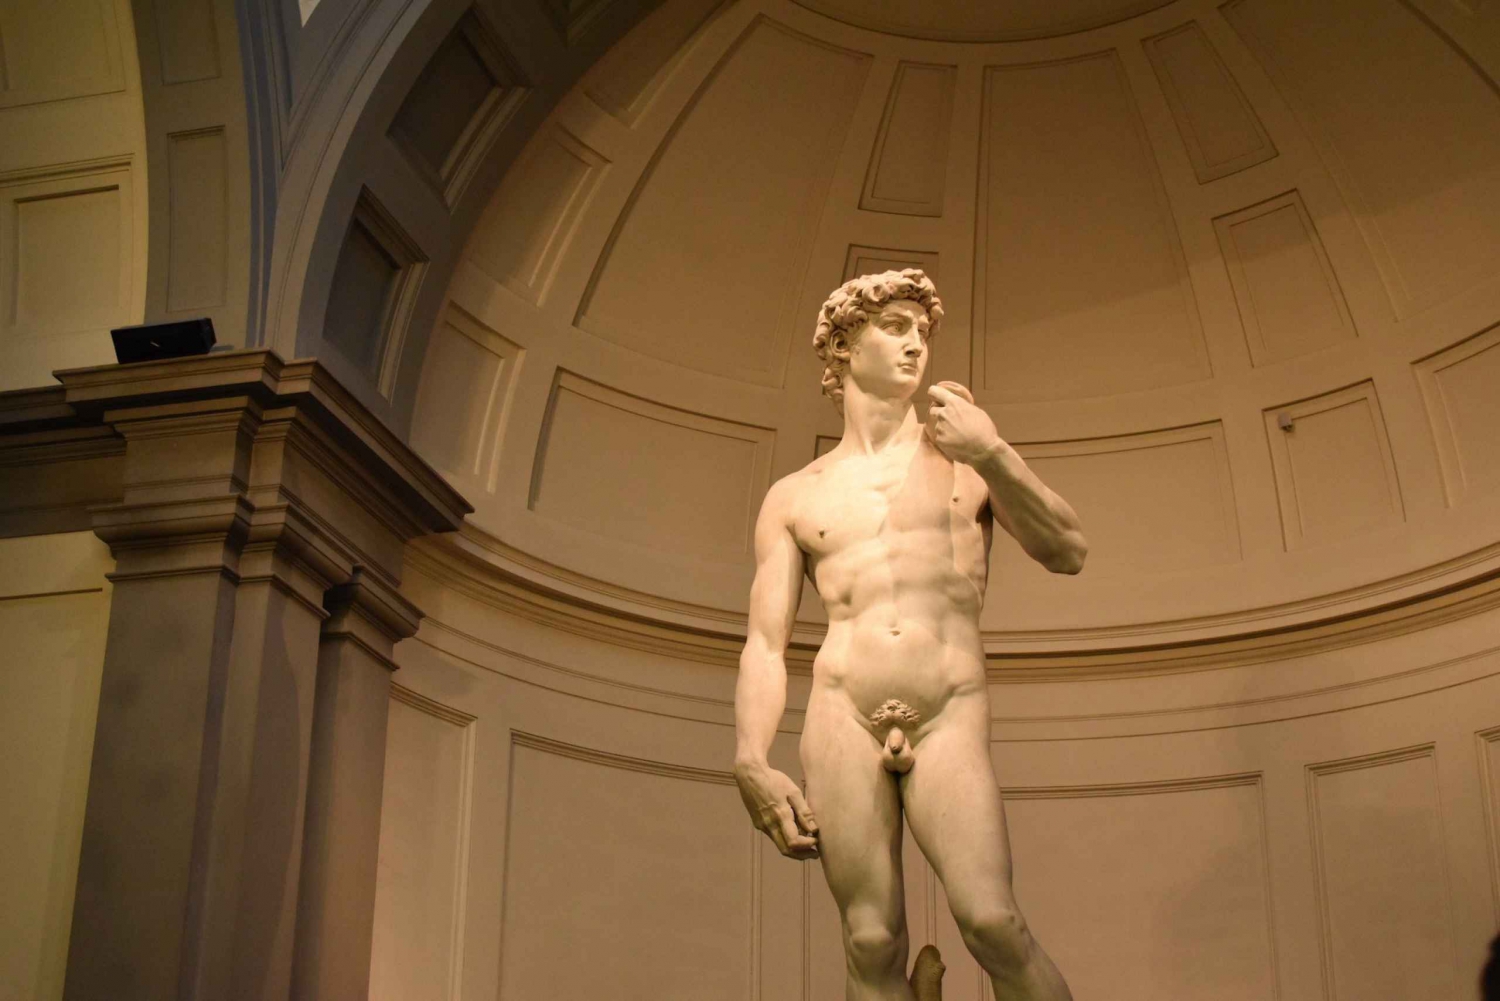 Florence: Accademia, Uffizi, and Duomo Guided Tour